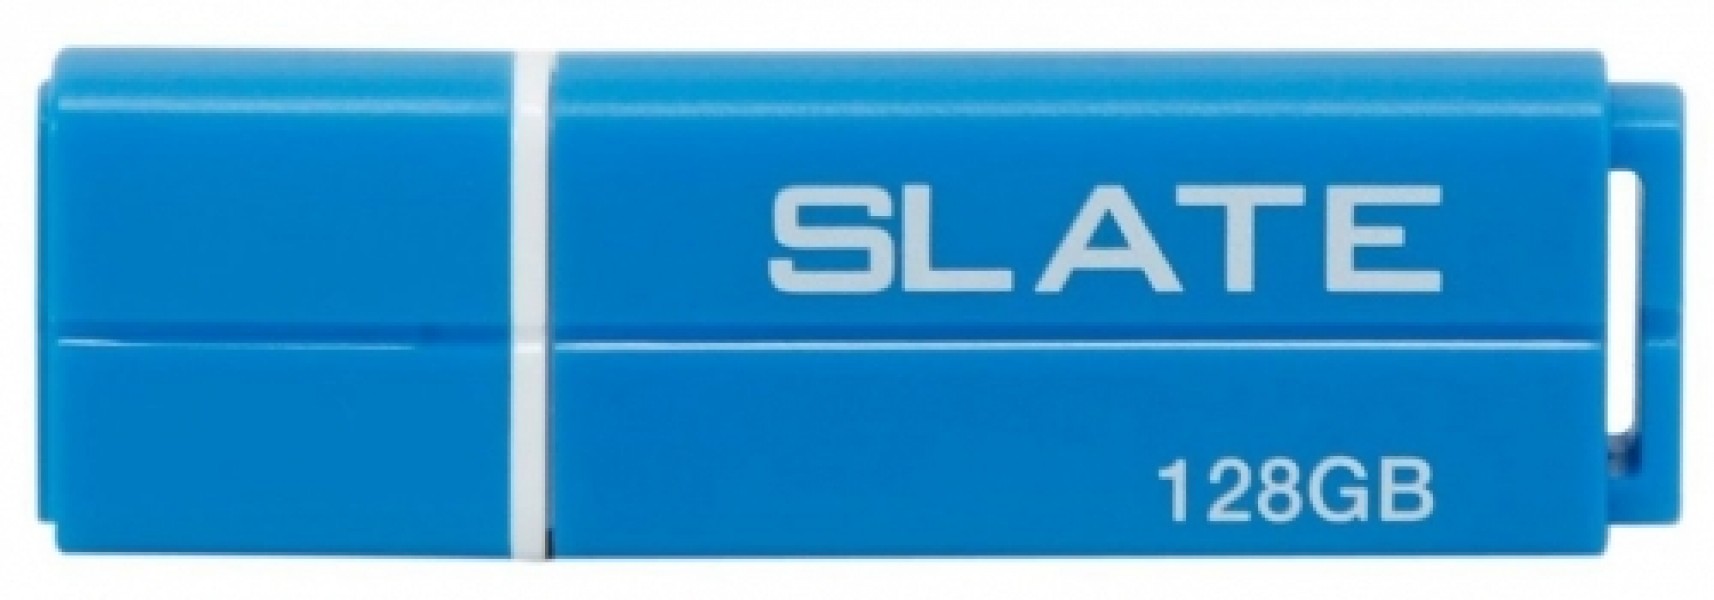 Patriot Slate 128GB USB 3.0 Blue